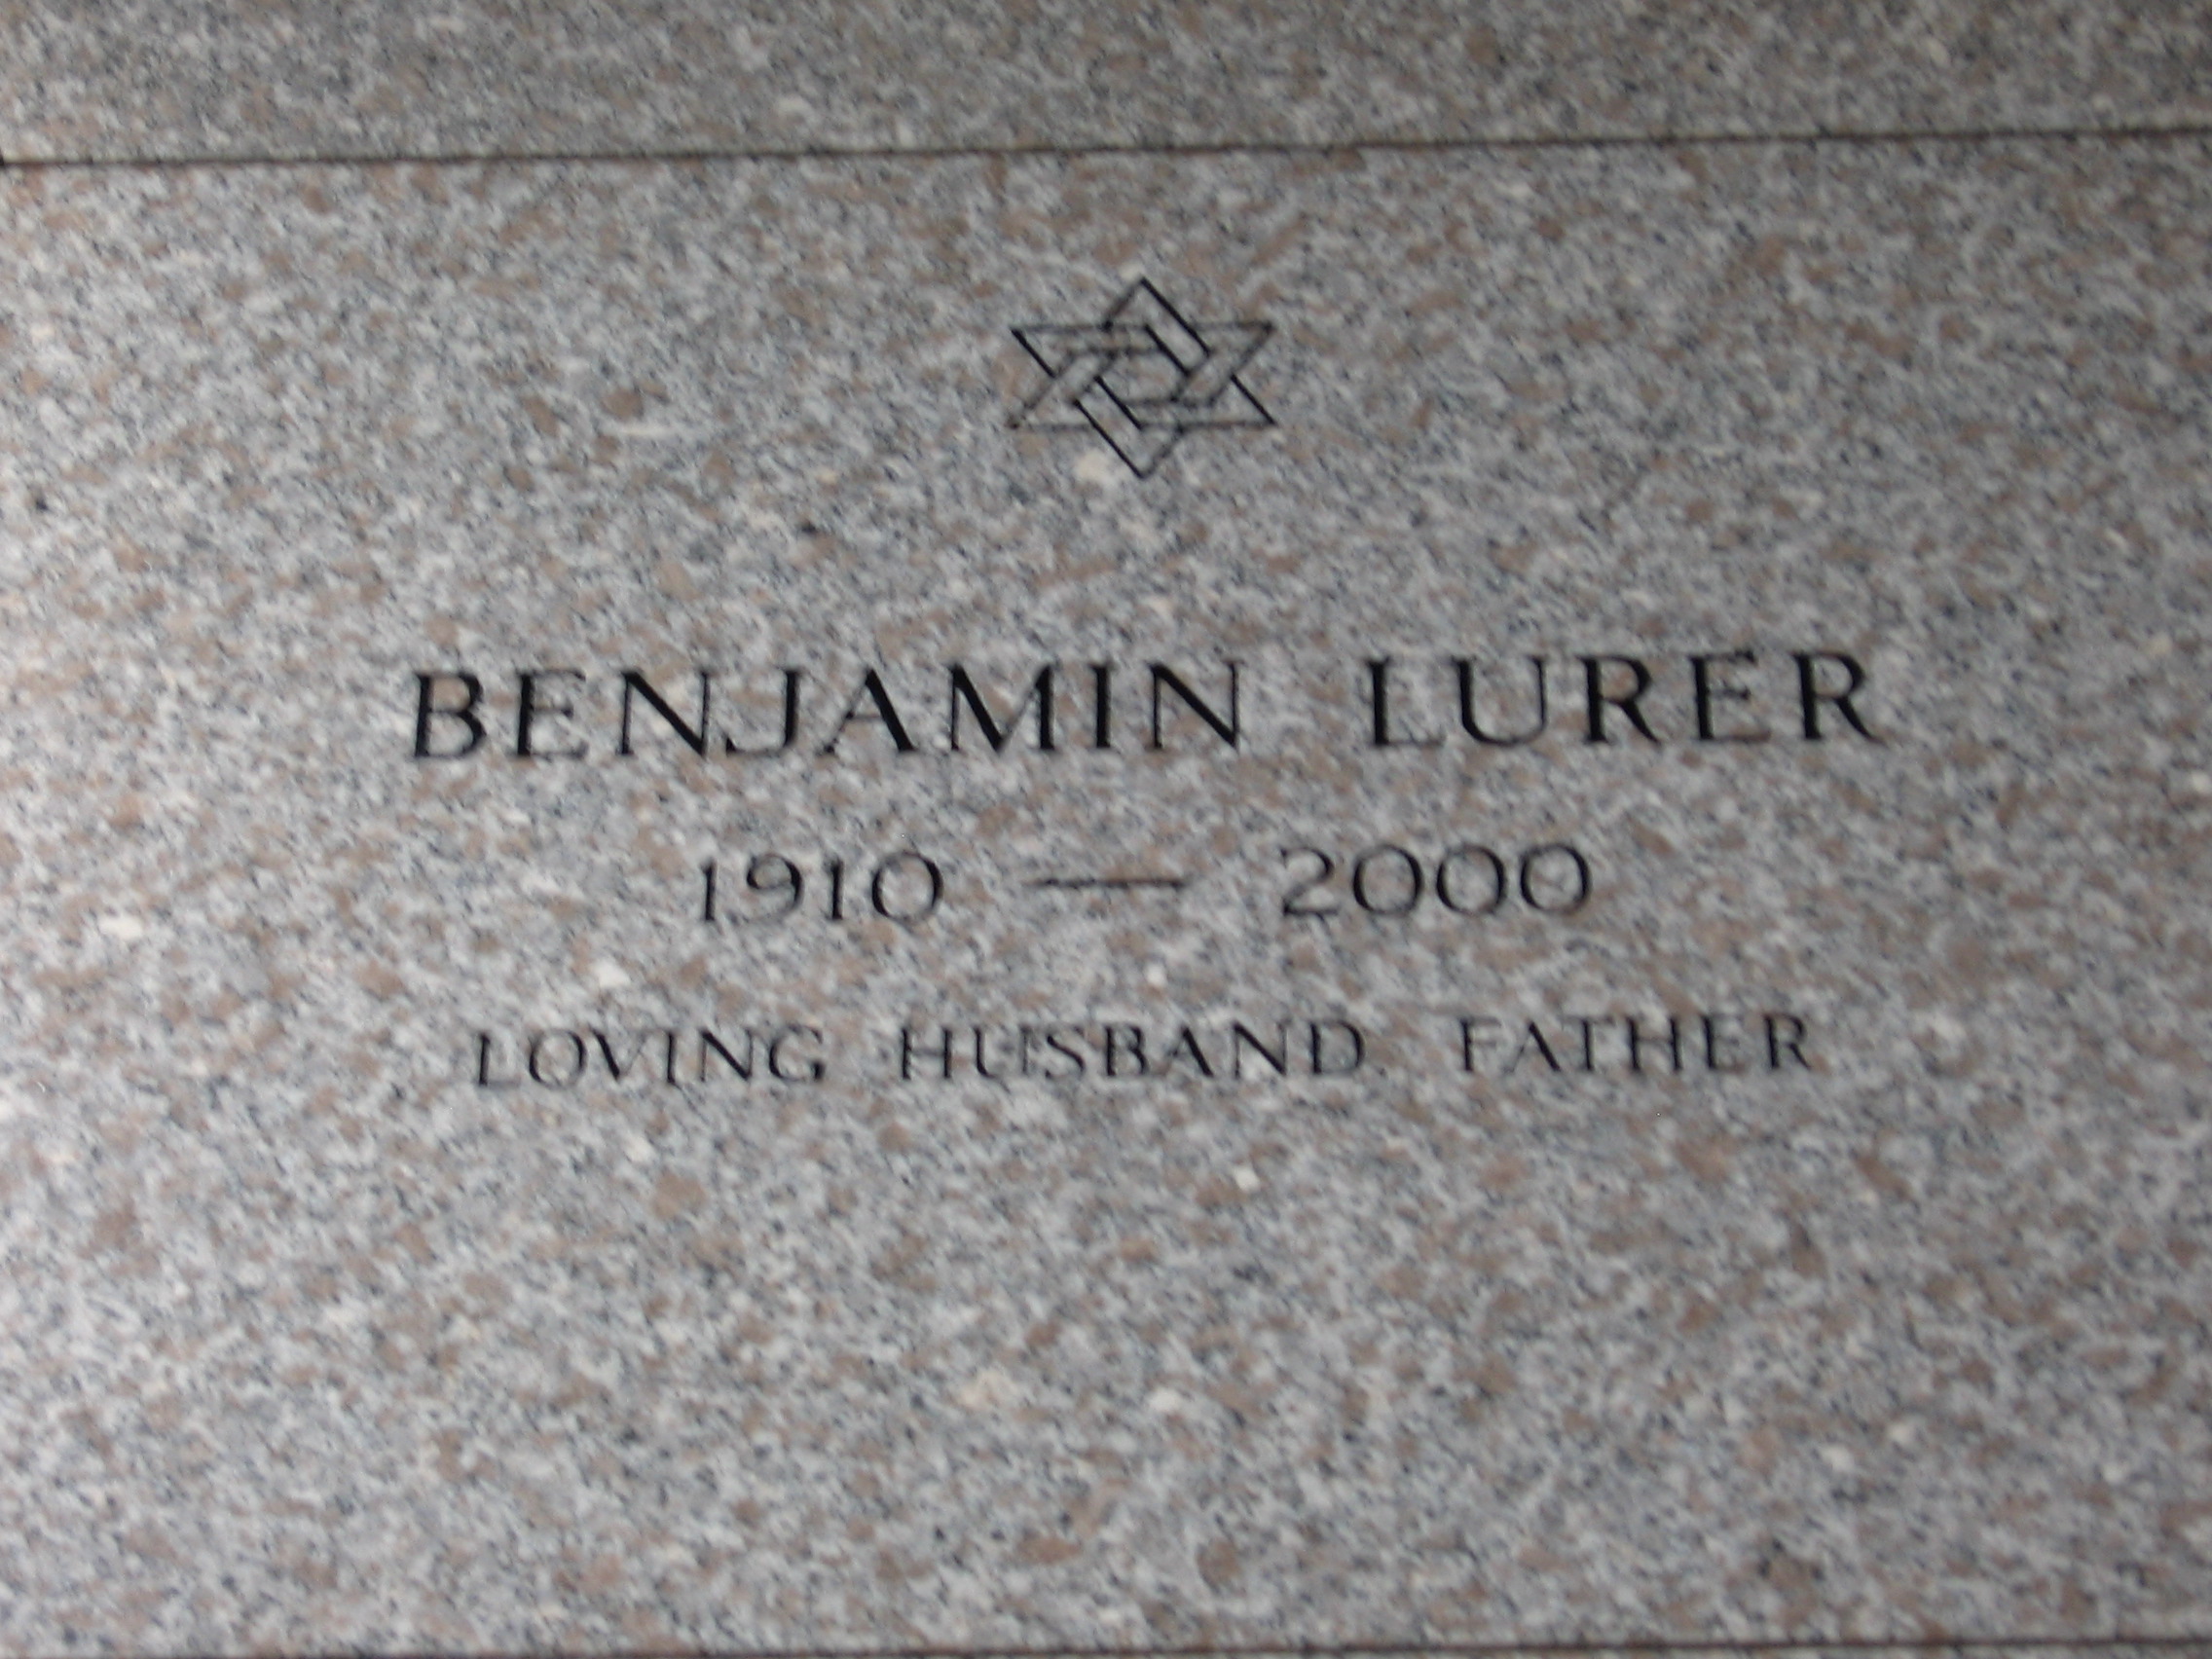 Benjamin Lurer